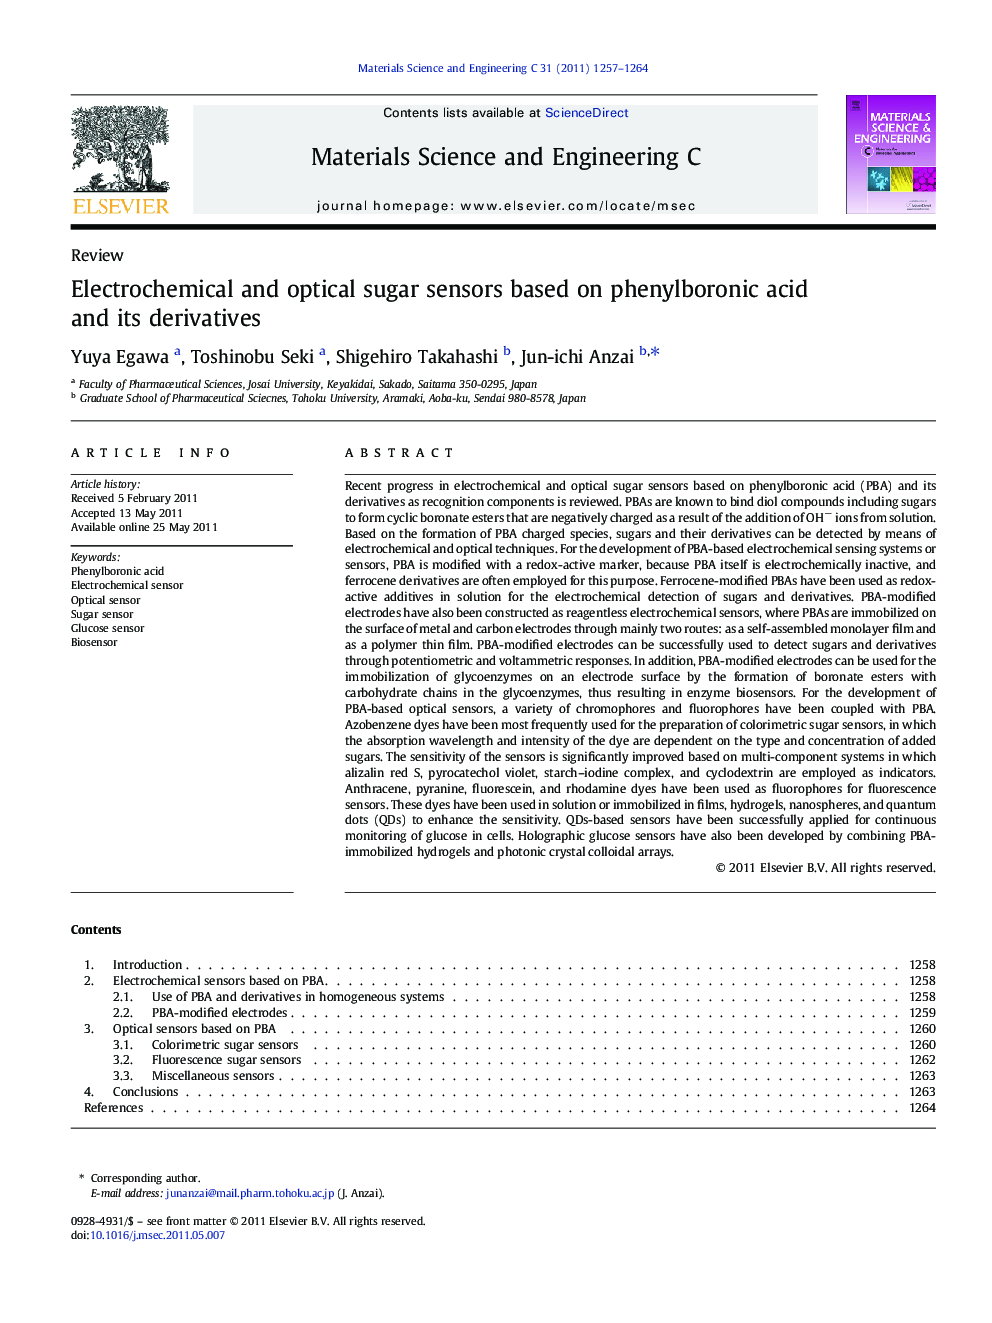 Electrochemical and optical sugar sensors based on phenylboronic acid and its derivatives